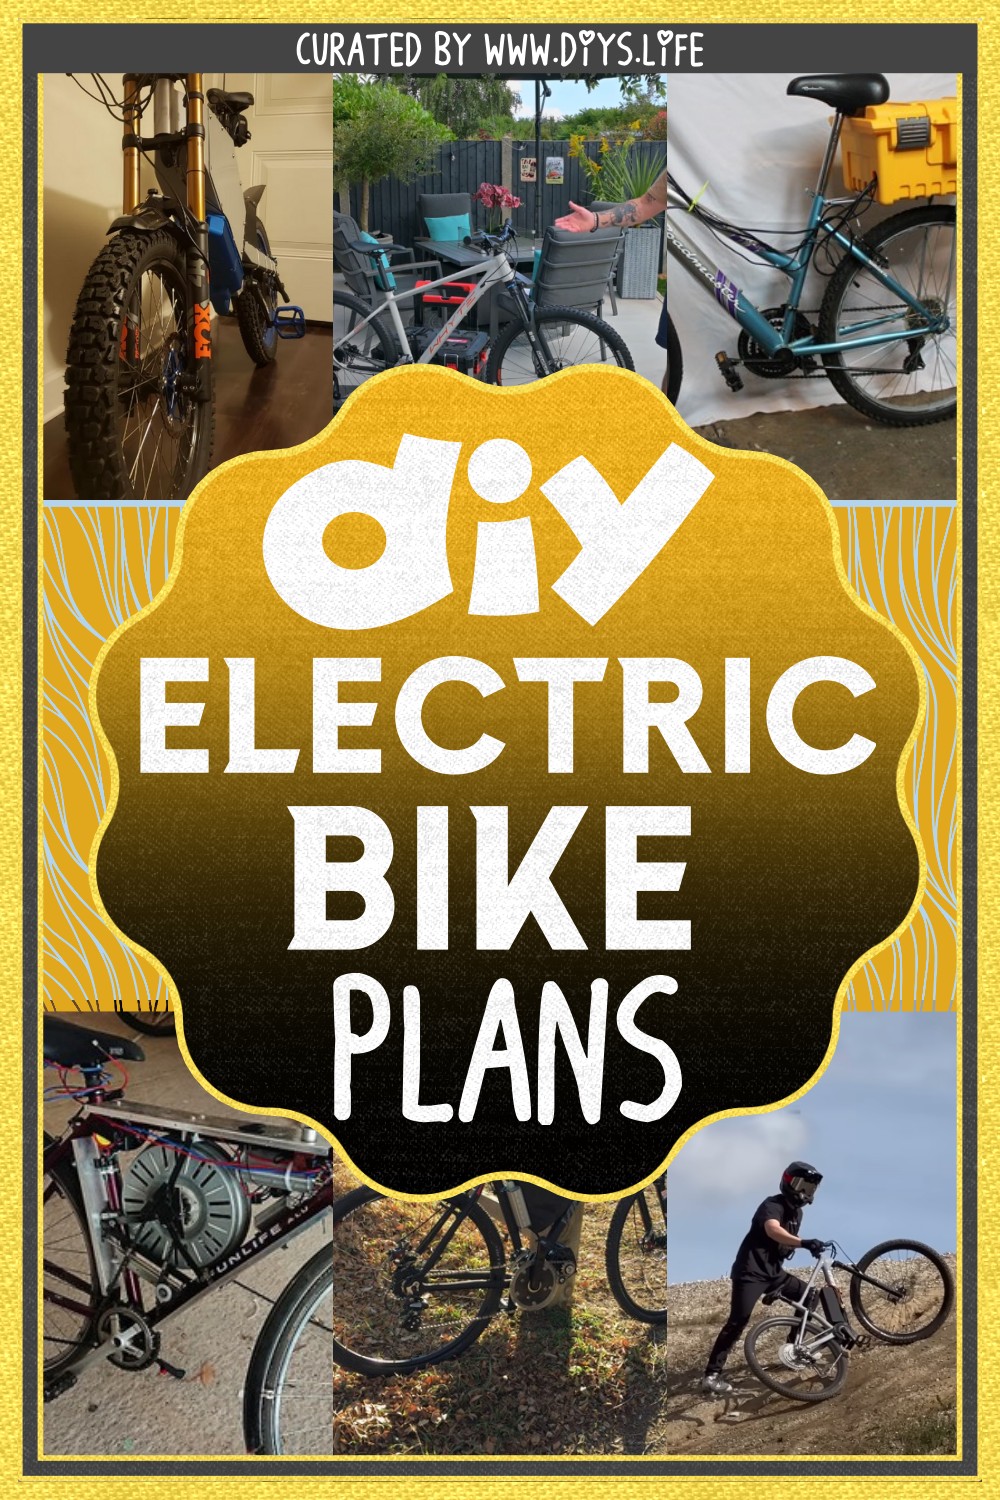 DIY Electric Bike plans